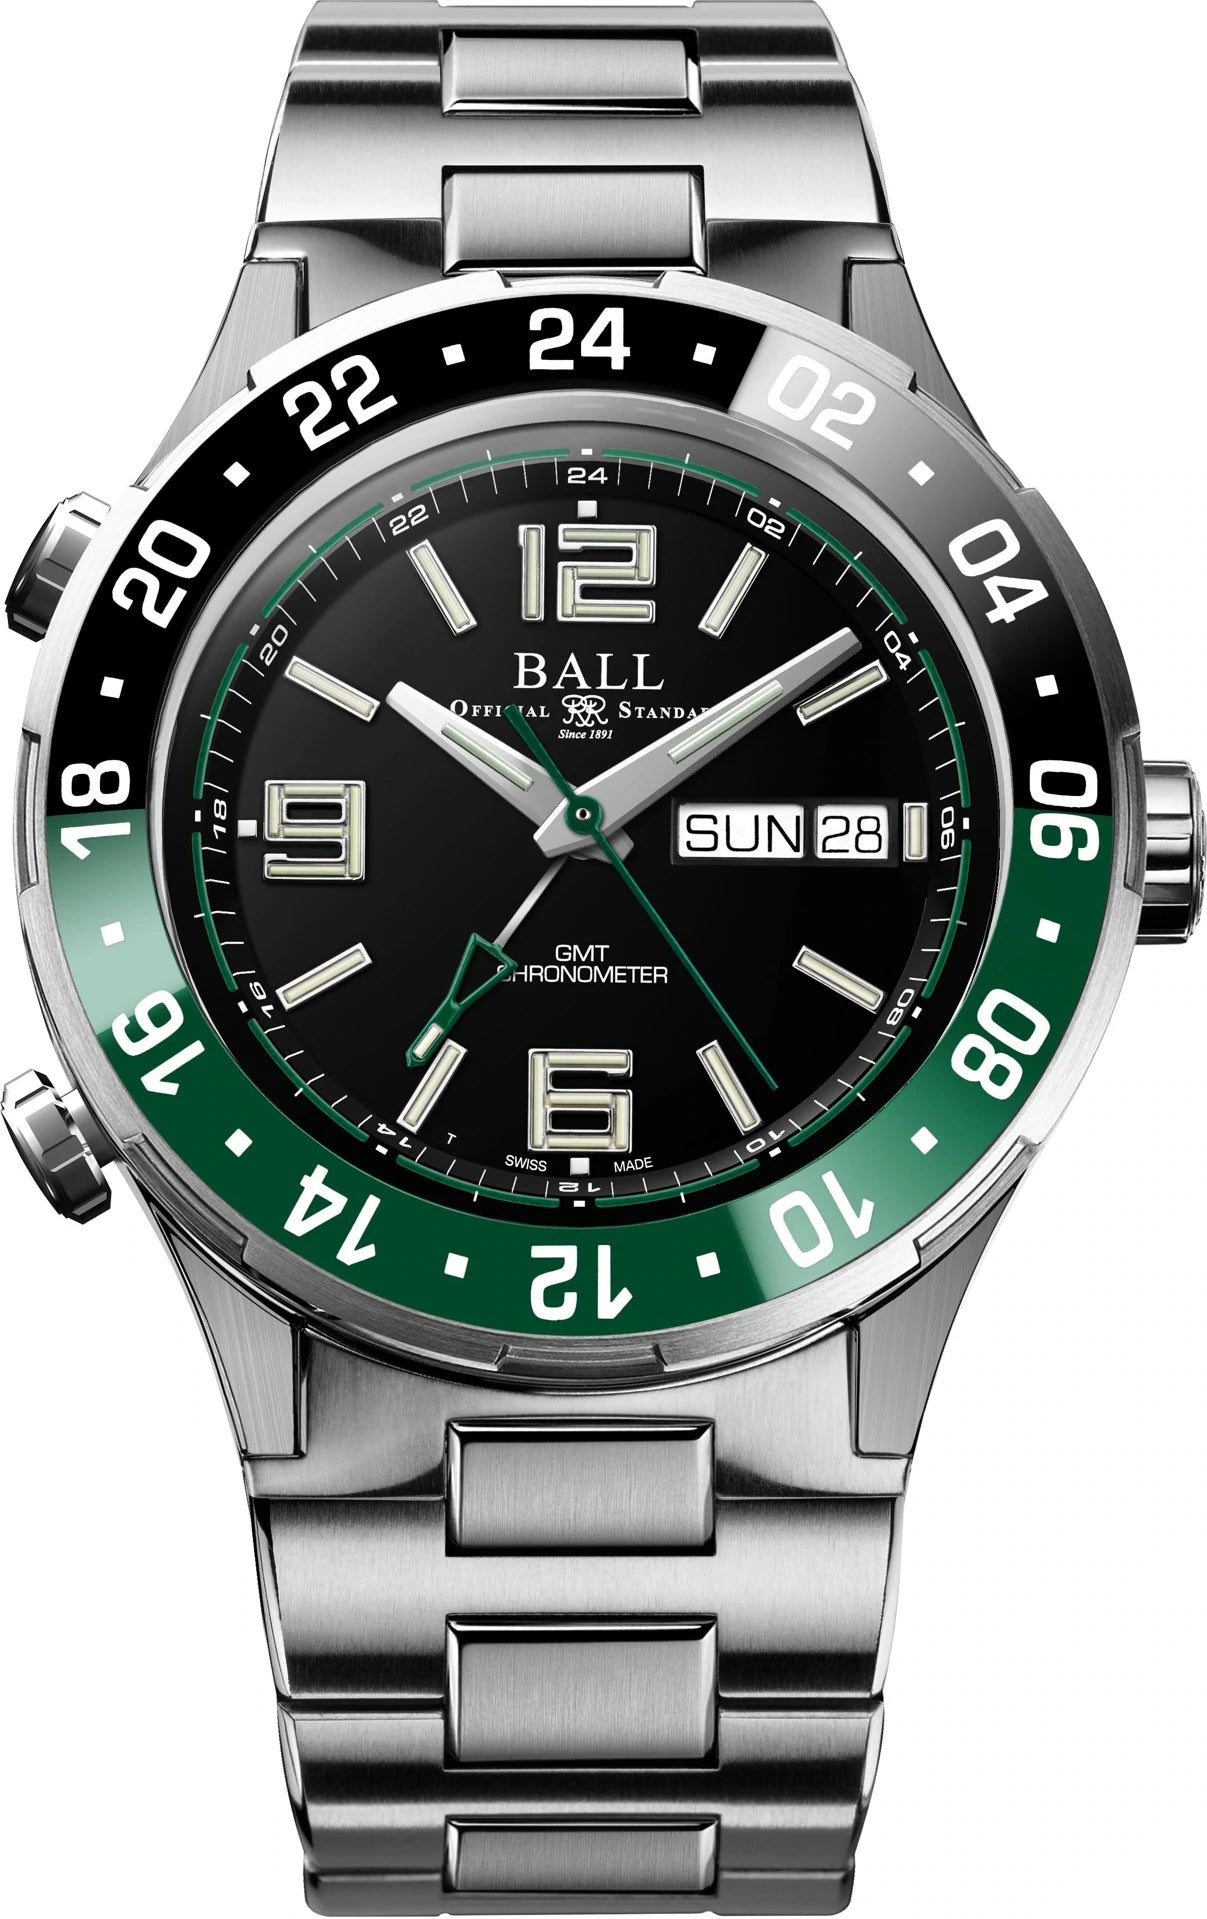 BALL Marine GMT - DG3030B-S2C-BK - Maple City Timepieces